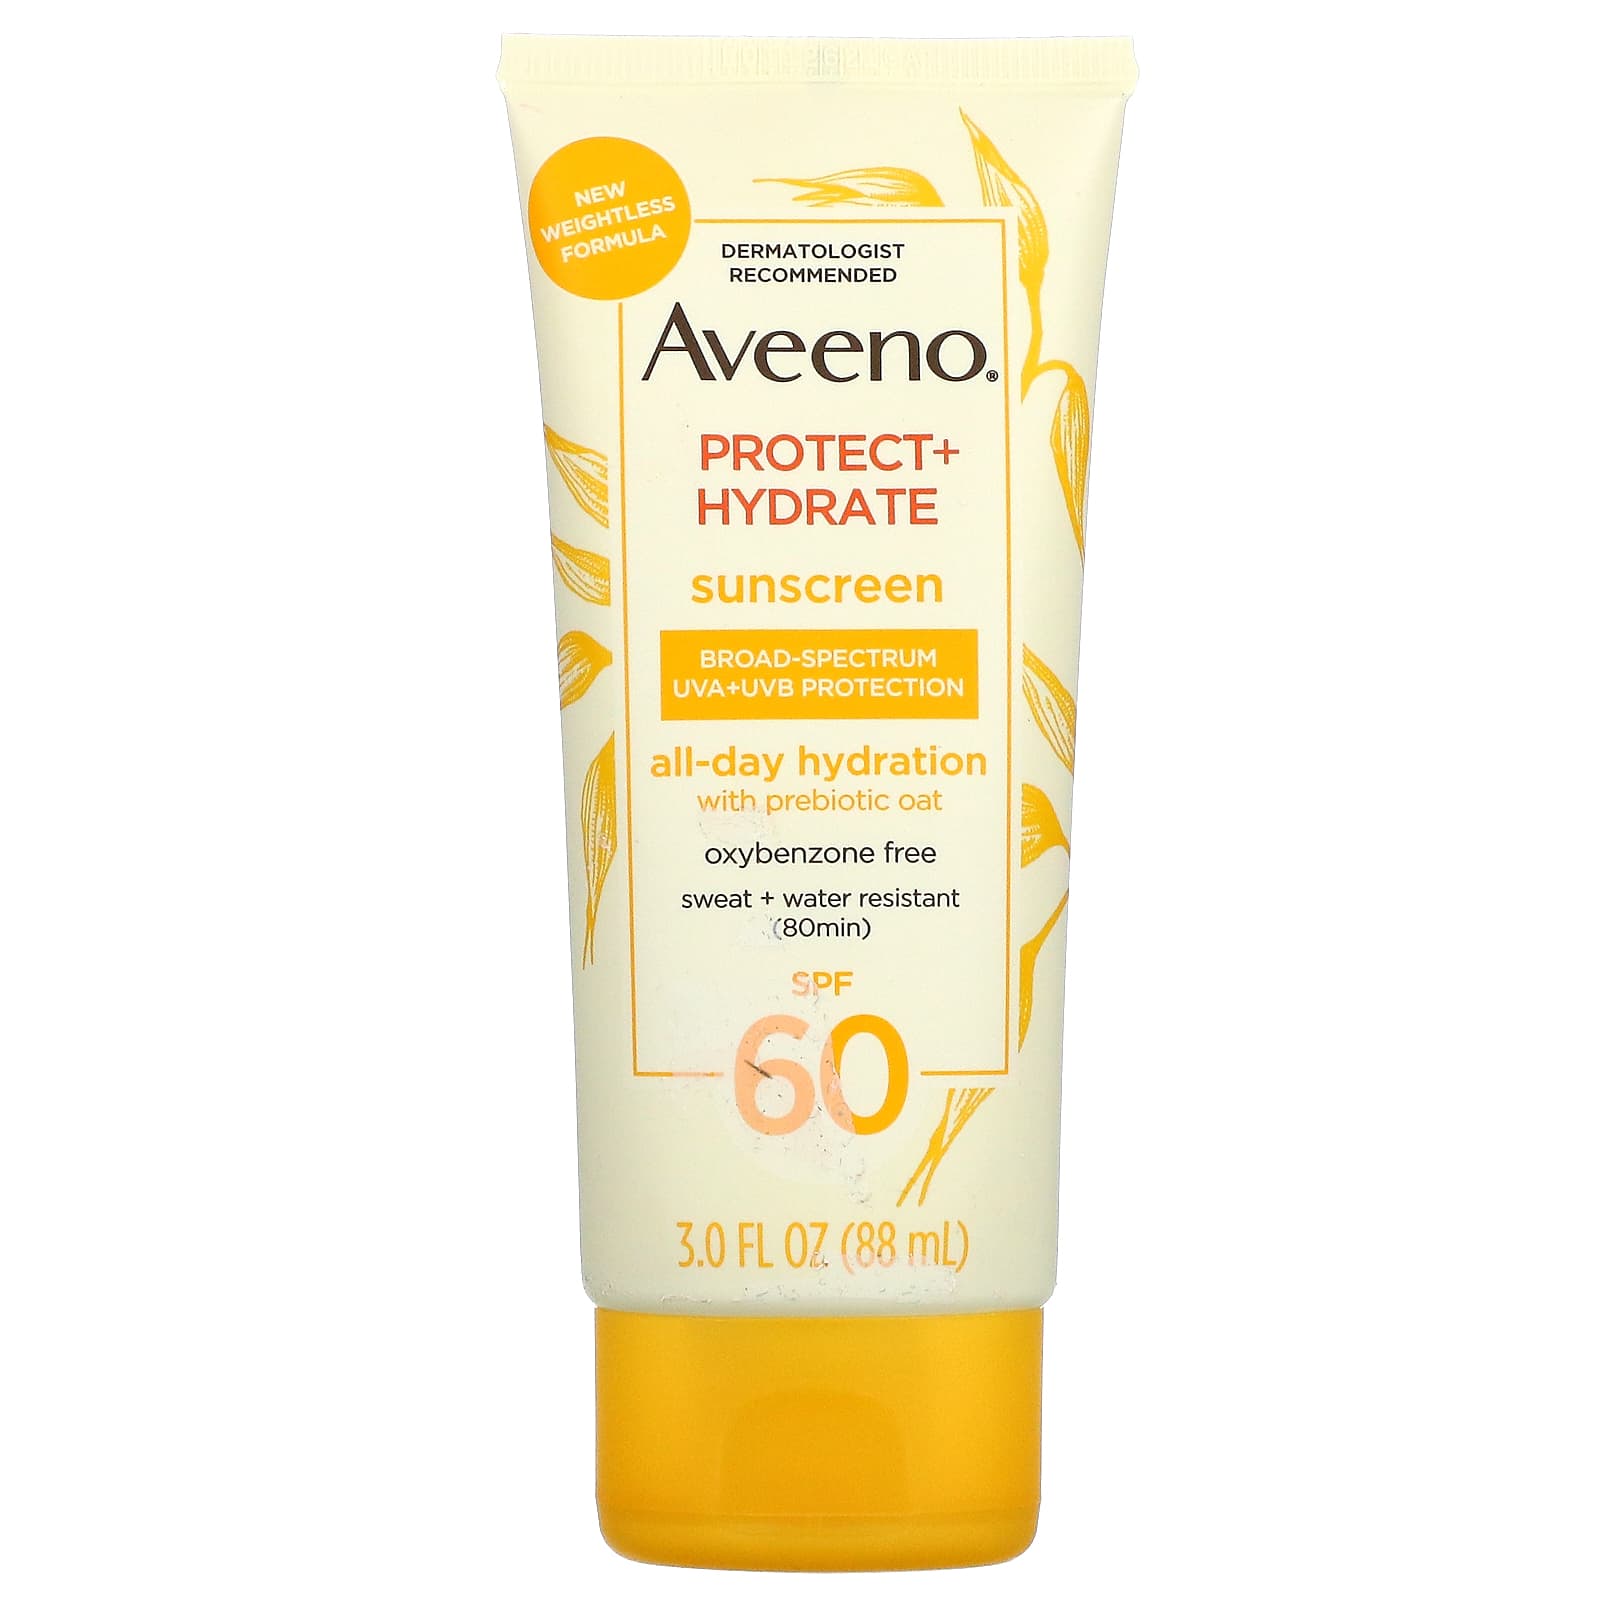 Солнцезащитный Крем Aveeno SPF 60, 88 мл солнцезащитный крем aveeno protect hydrate spf 60 88 мл